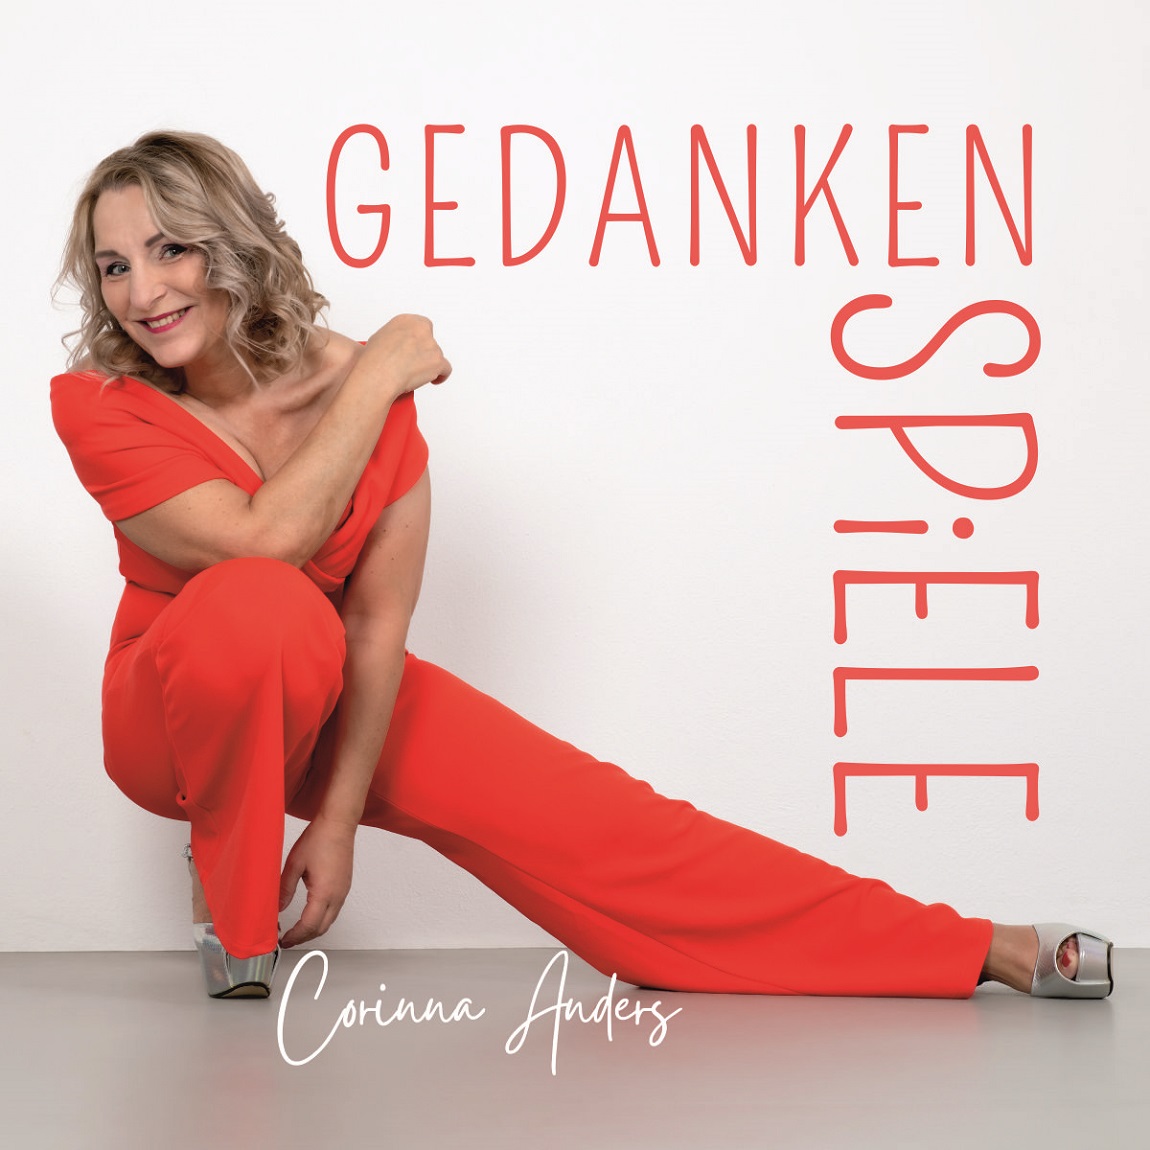 Corinna Anders - Gedankenspiele - AlbumFrontcover.jpg